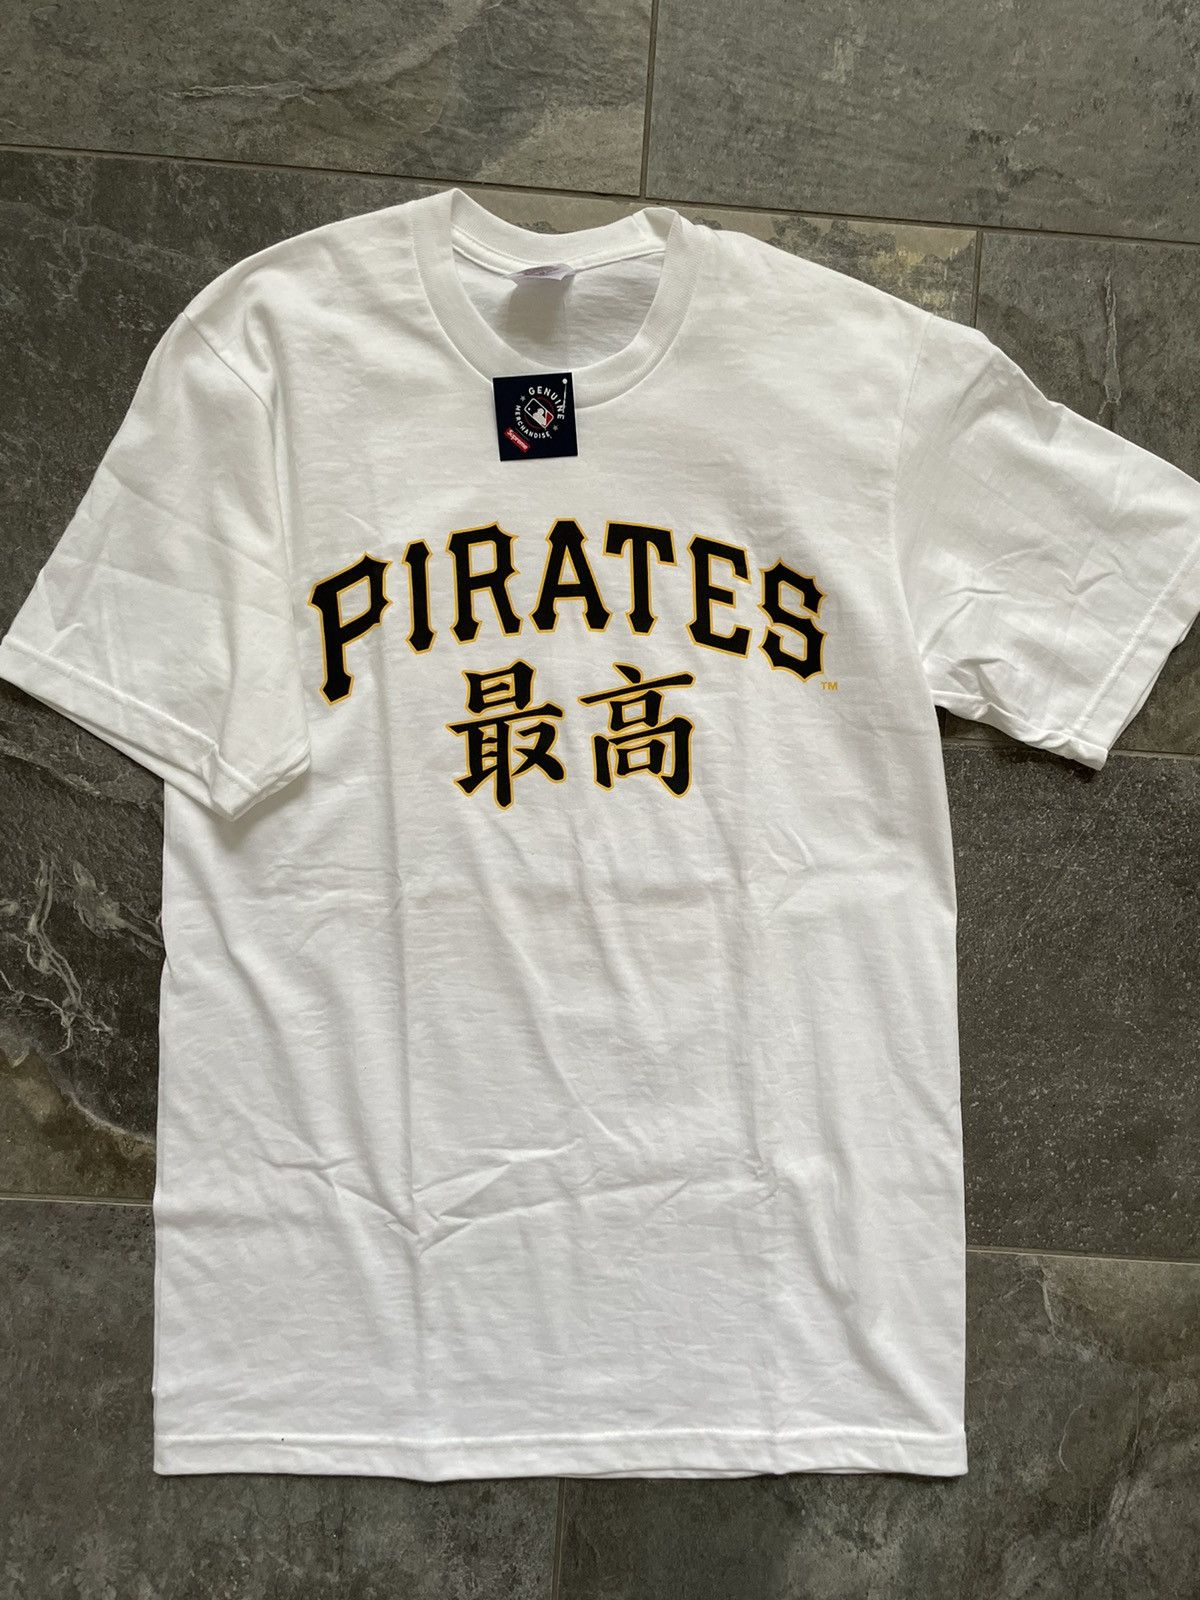 Supreme MLB Pittsburgh Pirates Kanji Teams Tee White